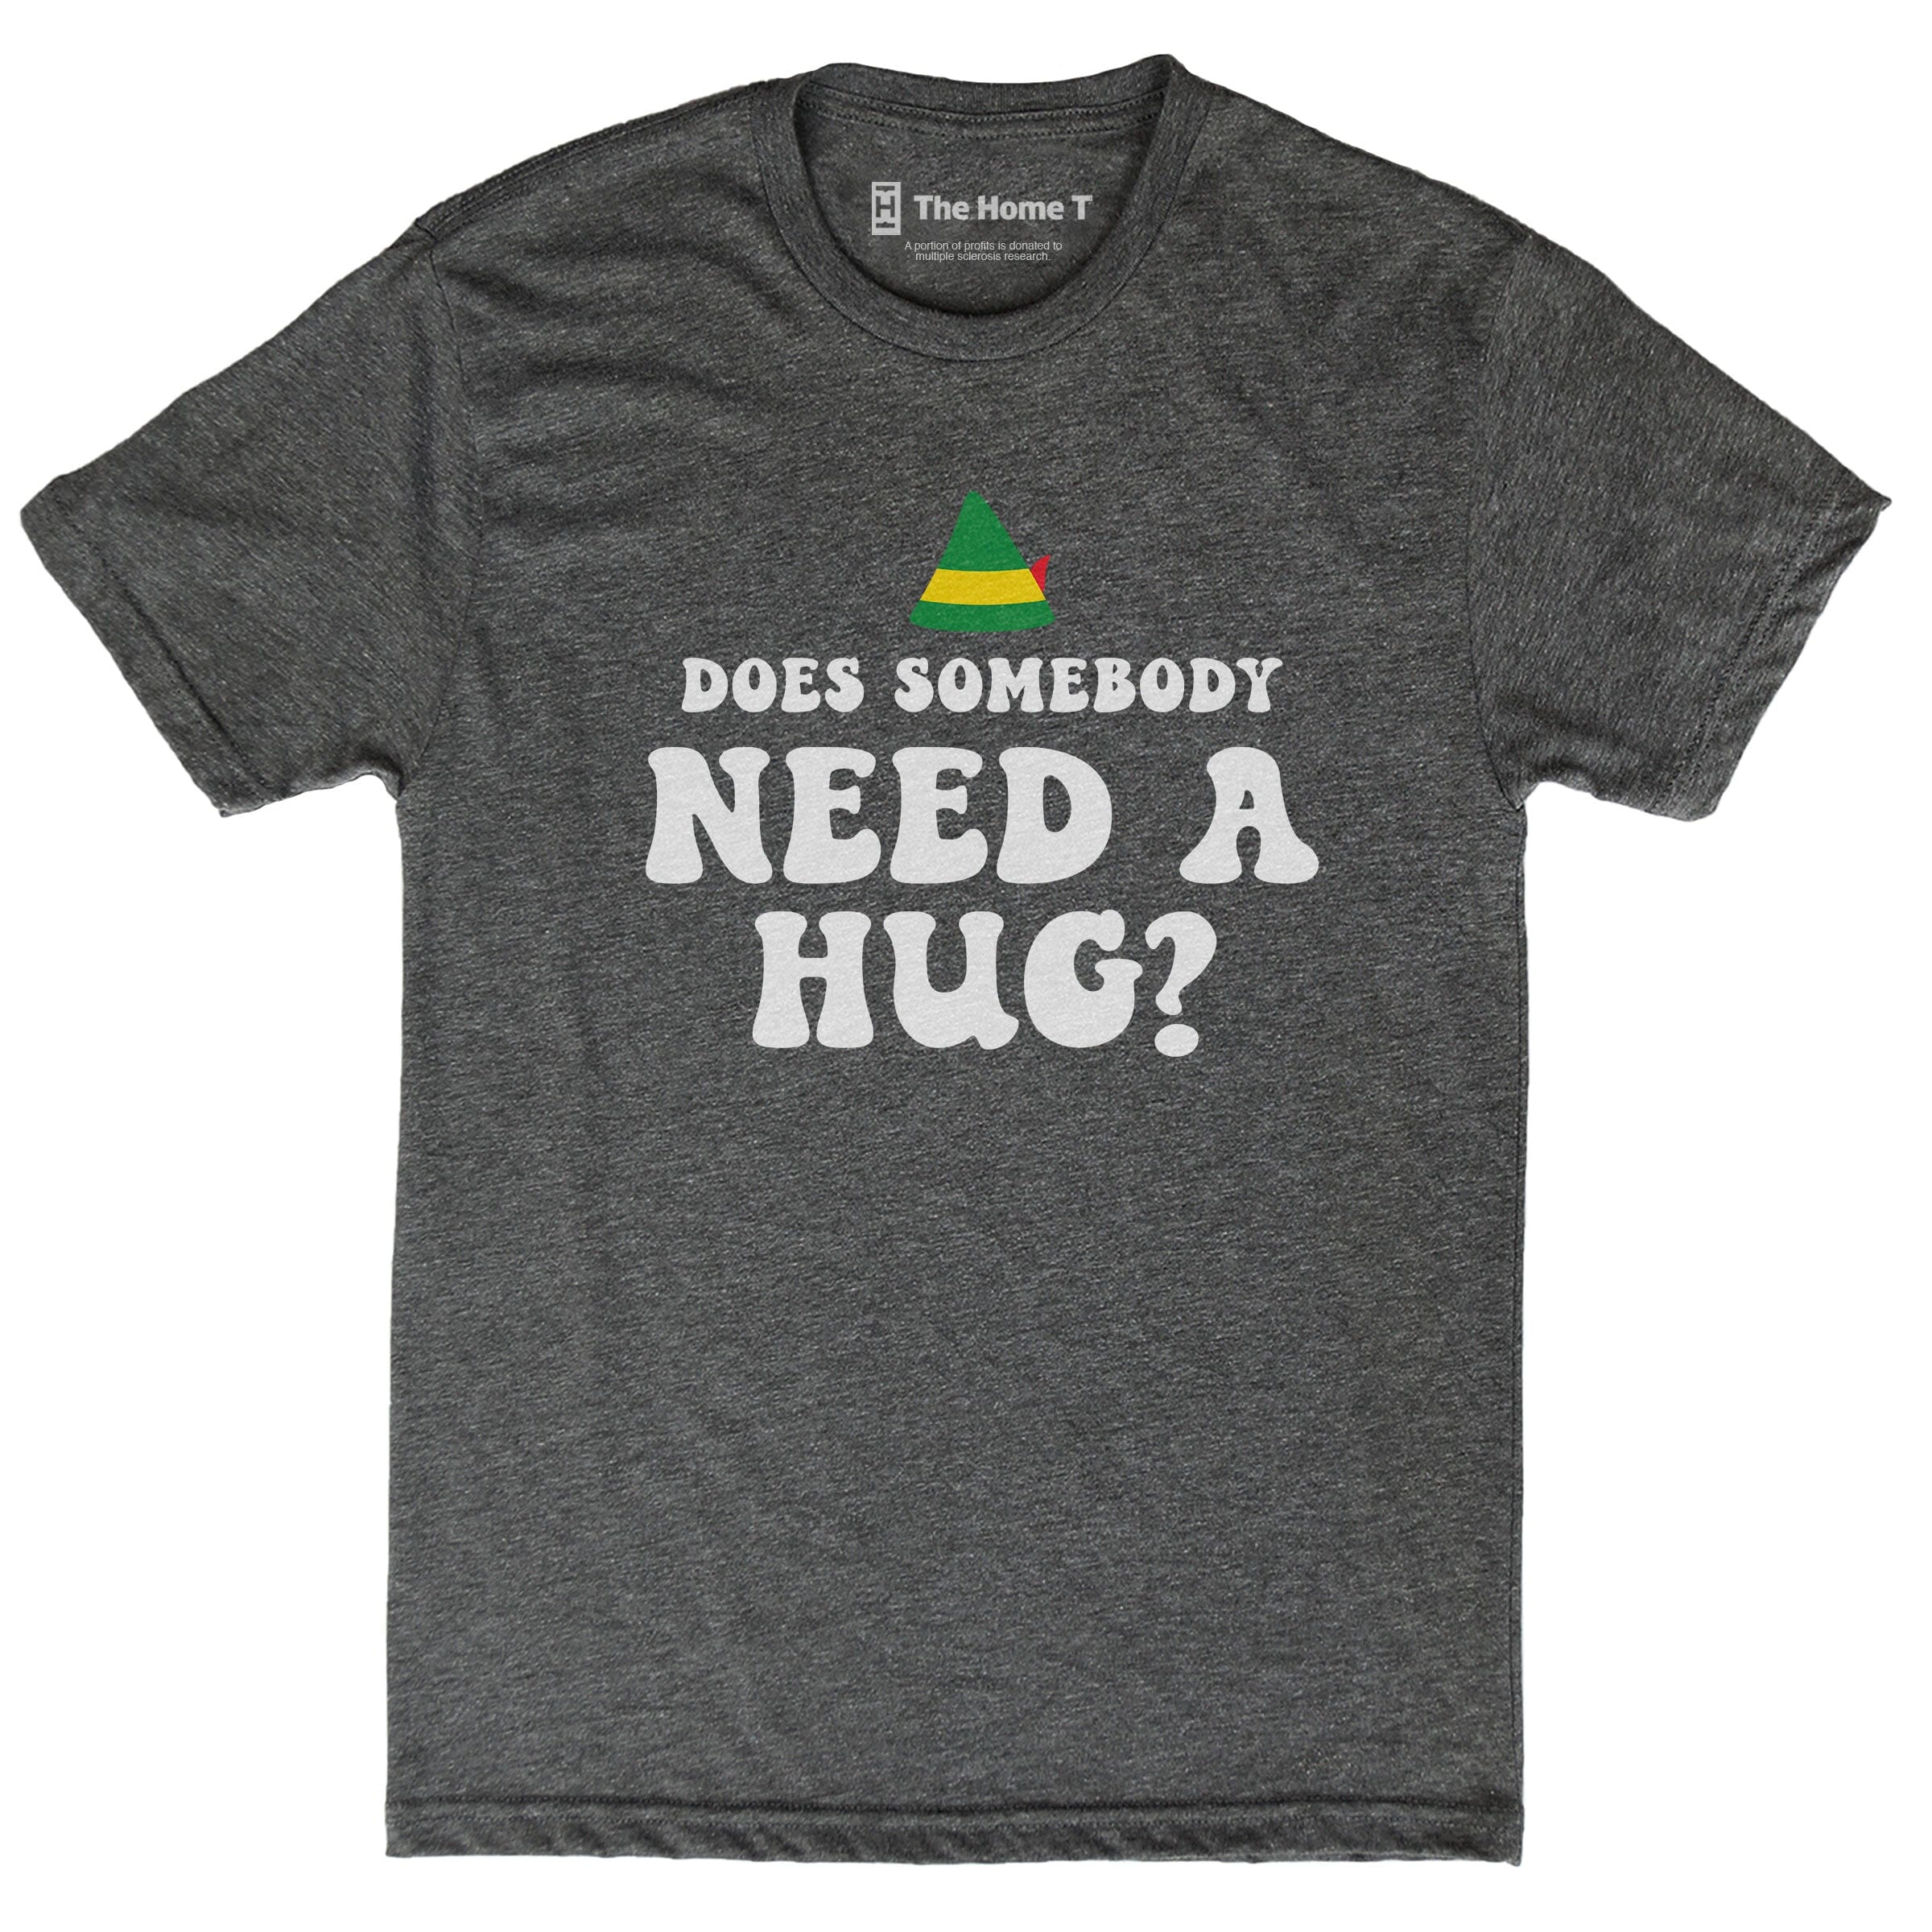 Does Somebody Need a Hug?